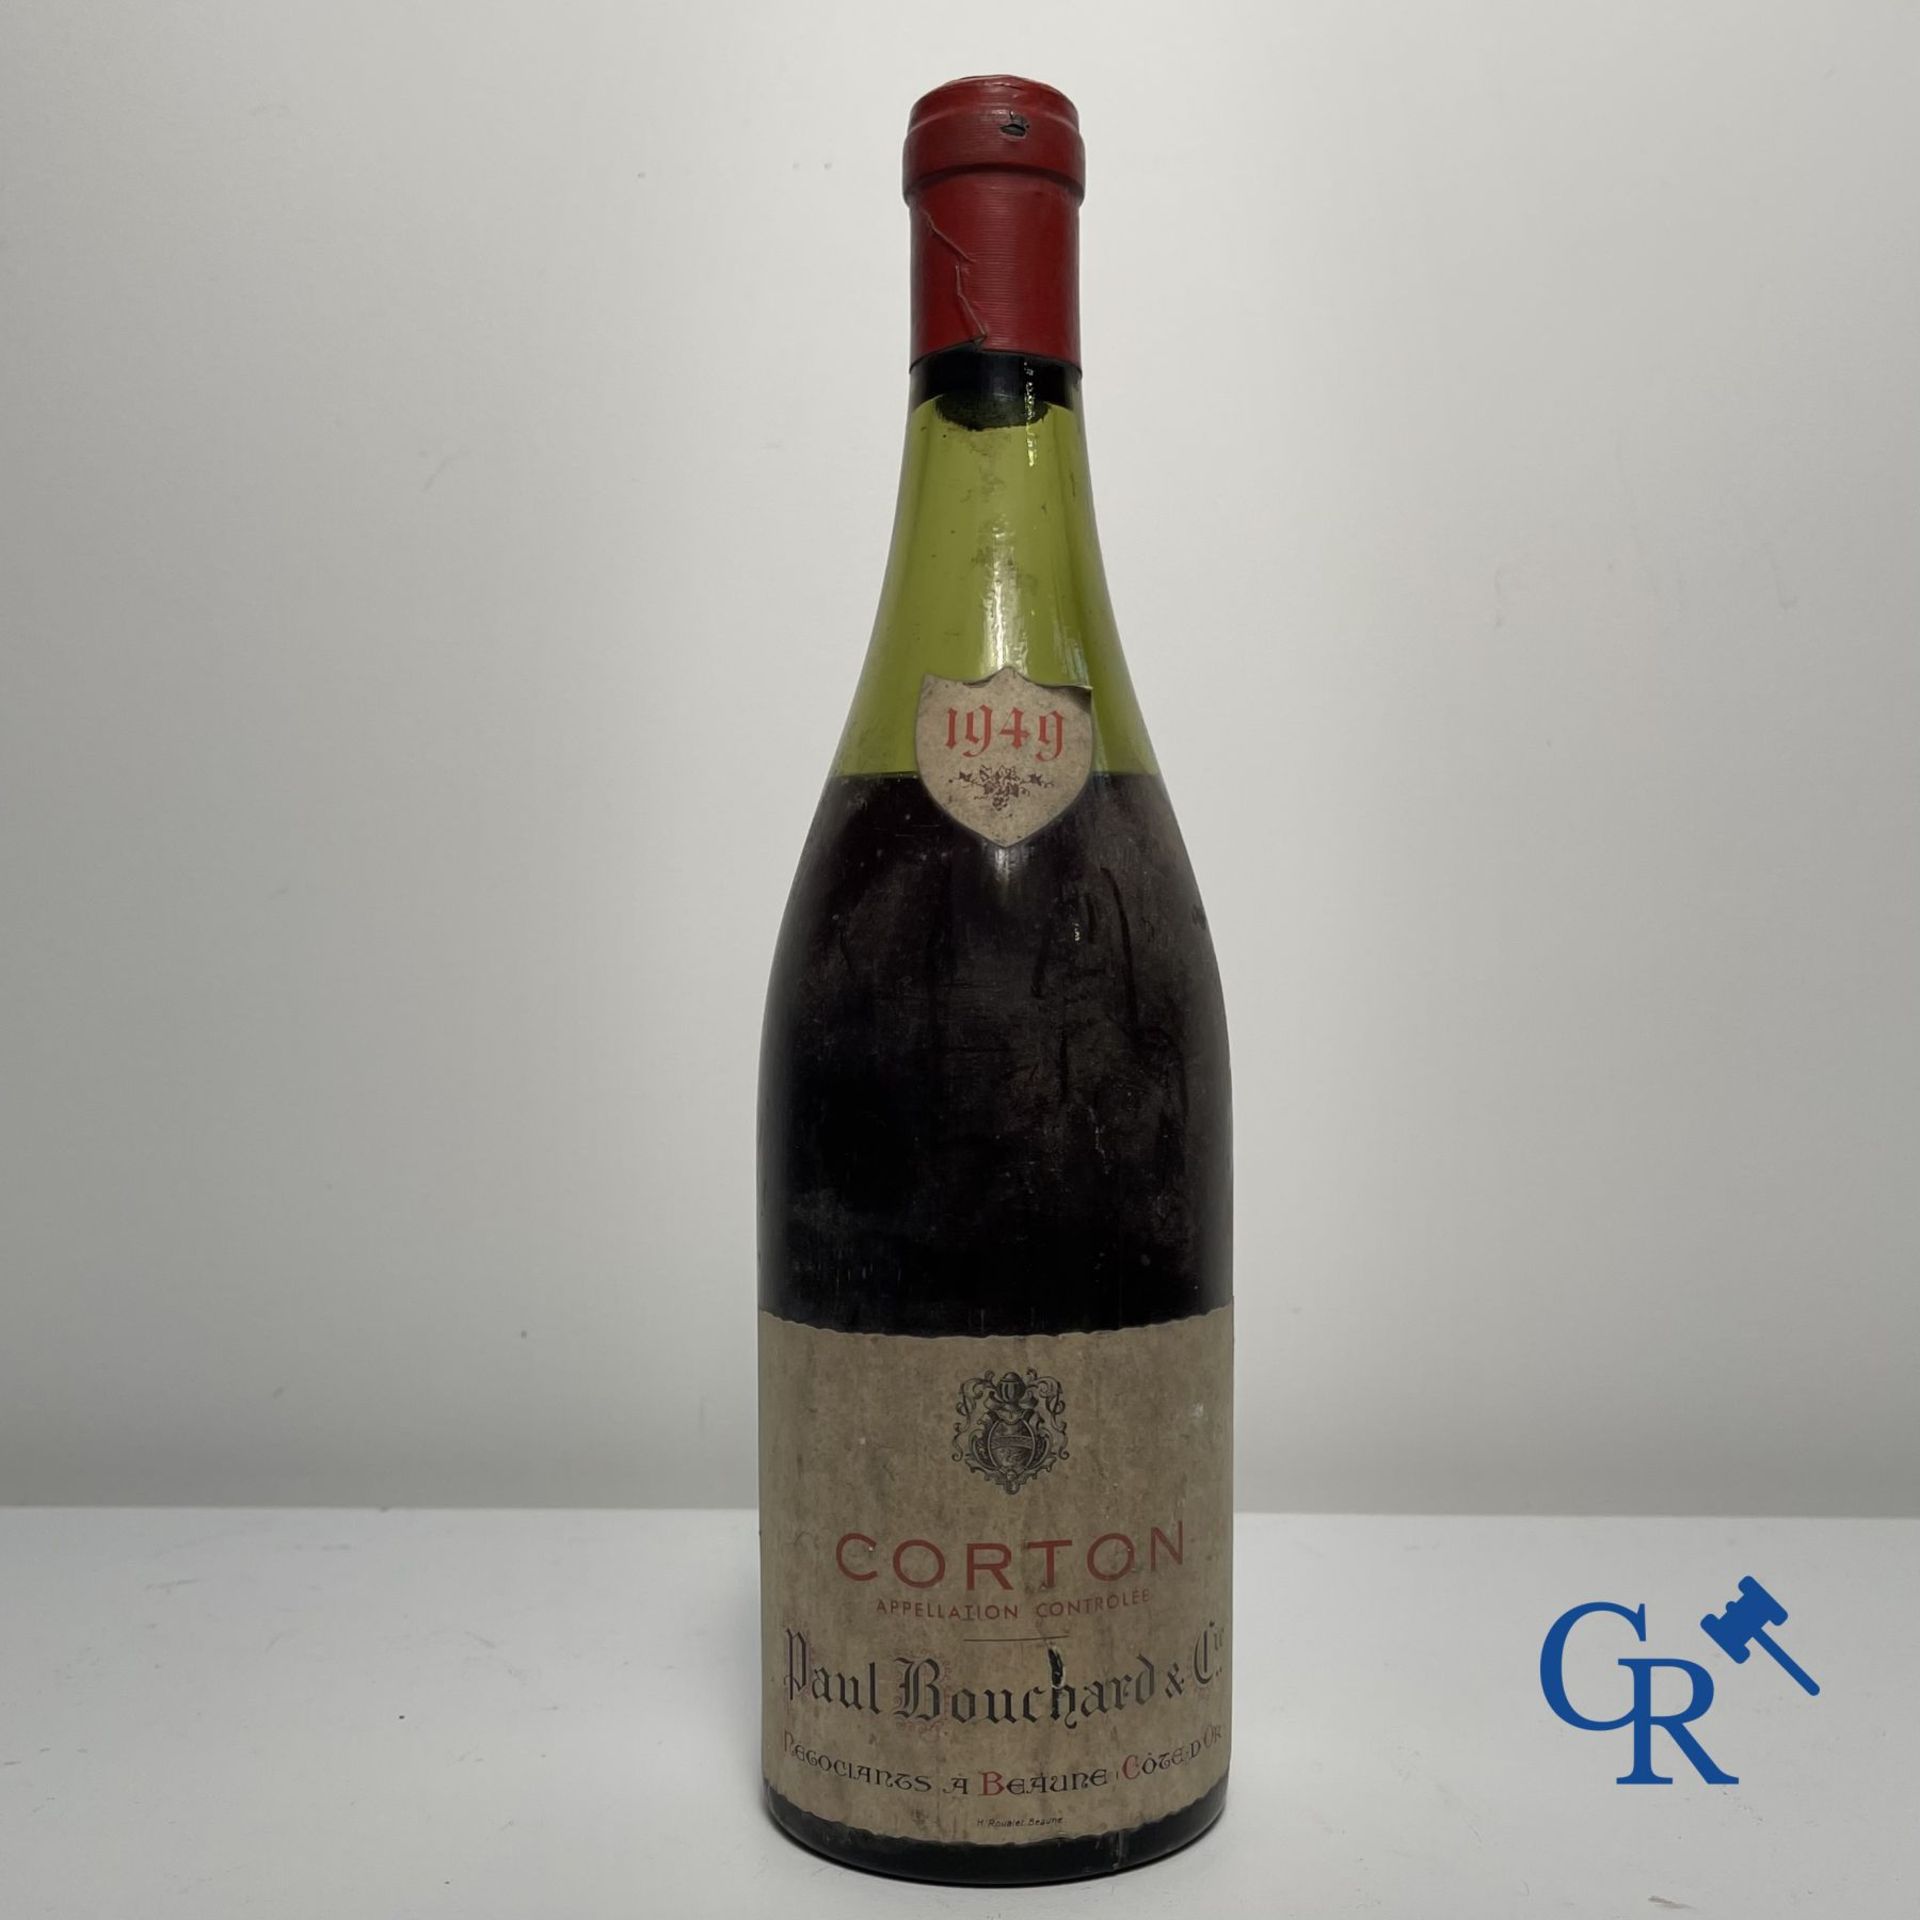 Wine: Burgundy, Corton 1949 Paul Bouchard & Cie. 0.75 L Red.